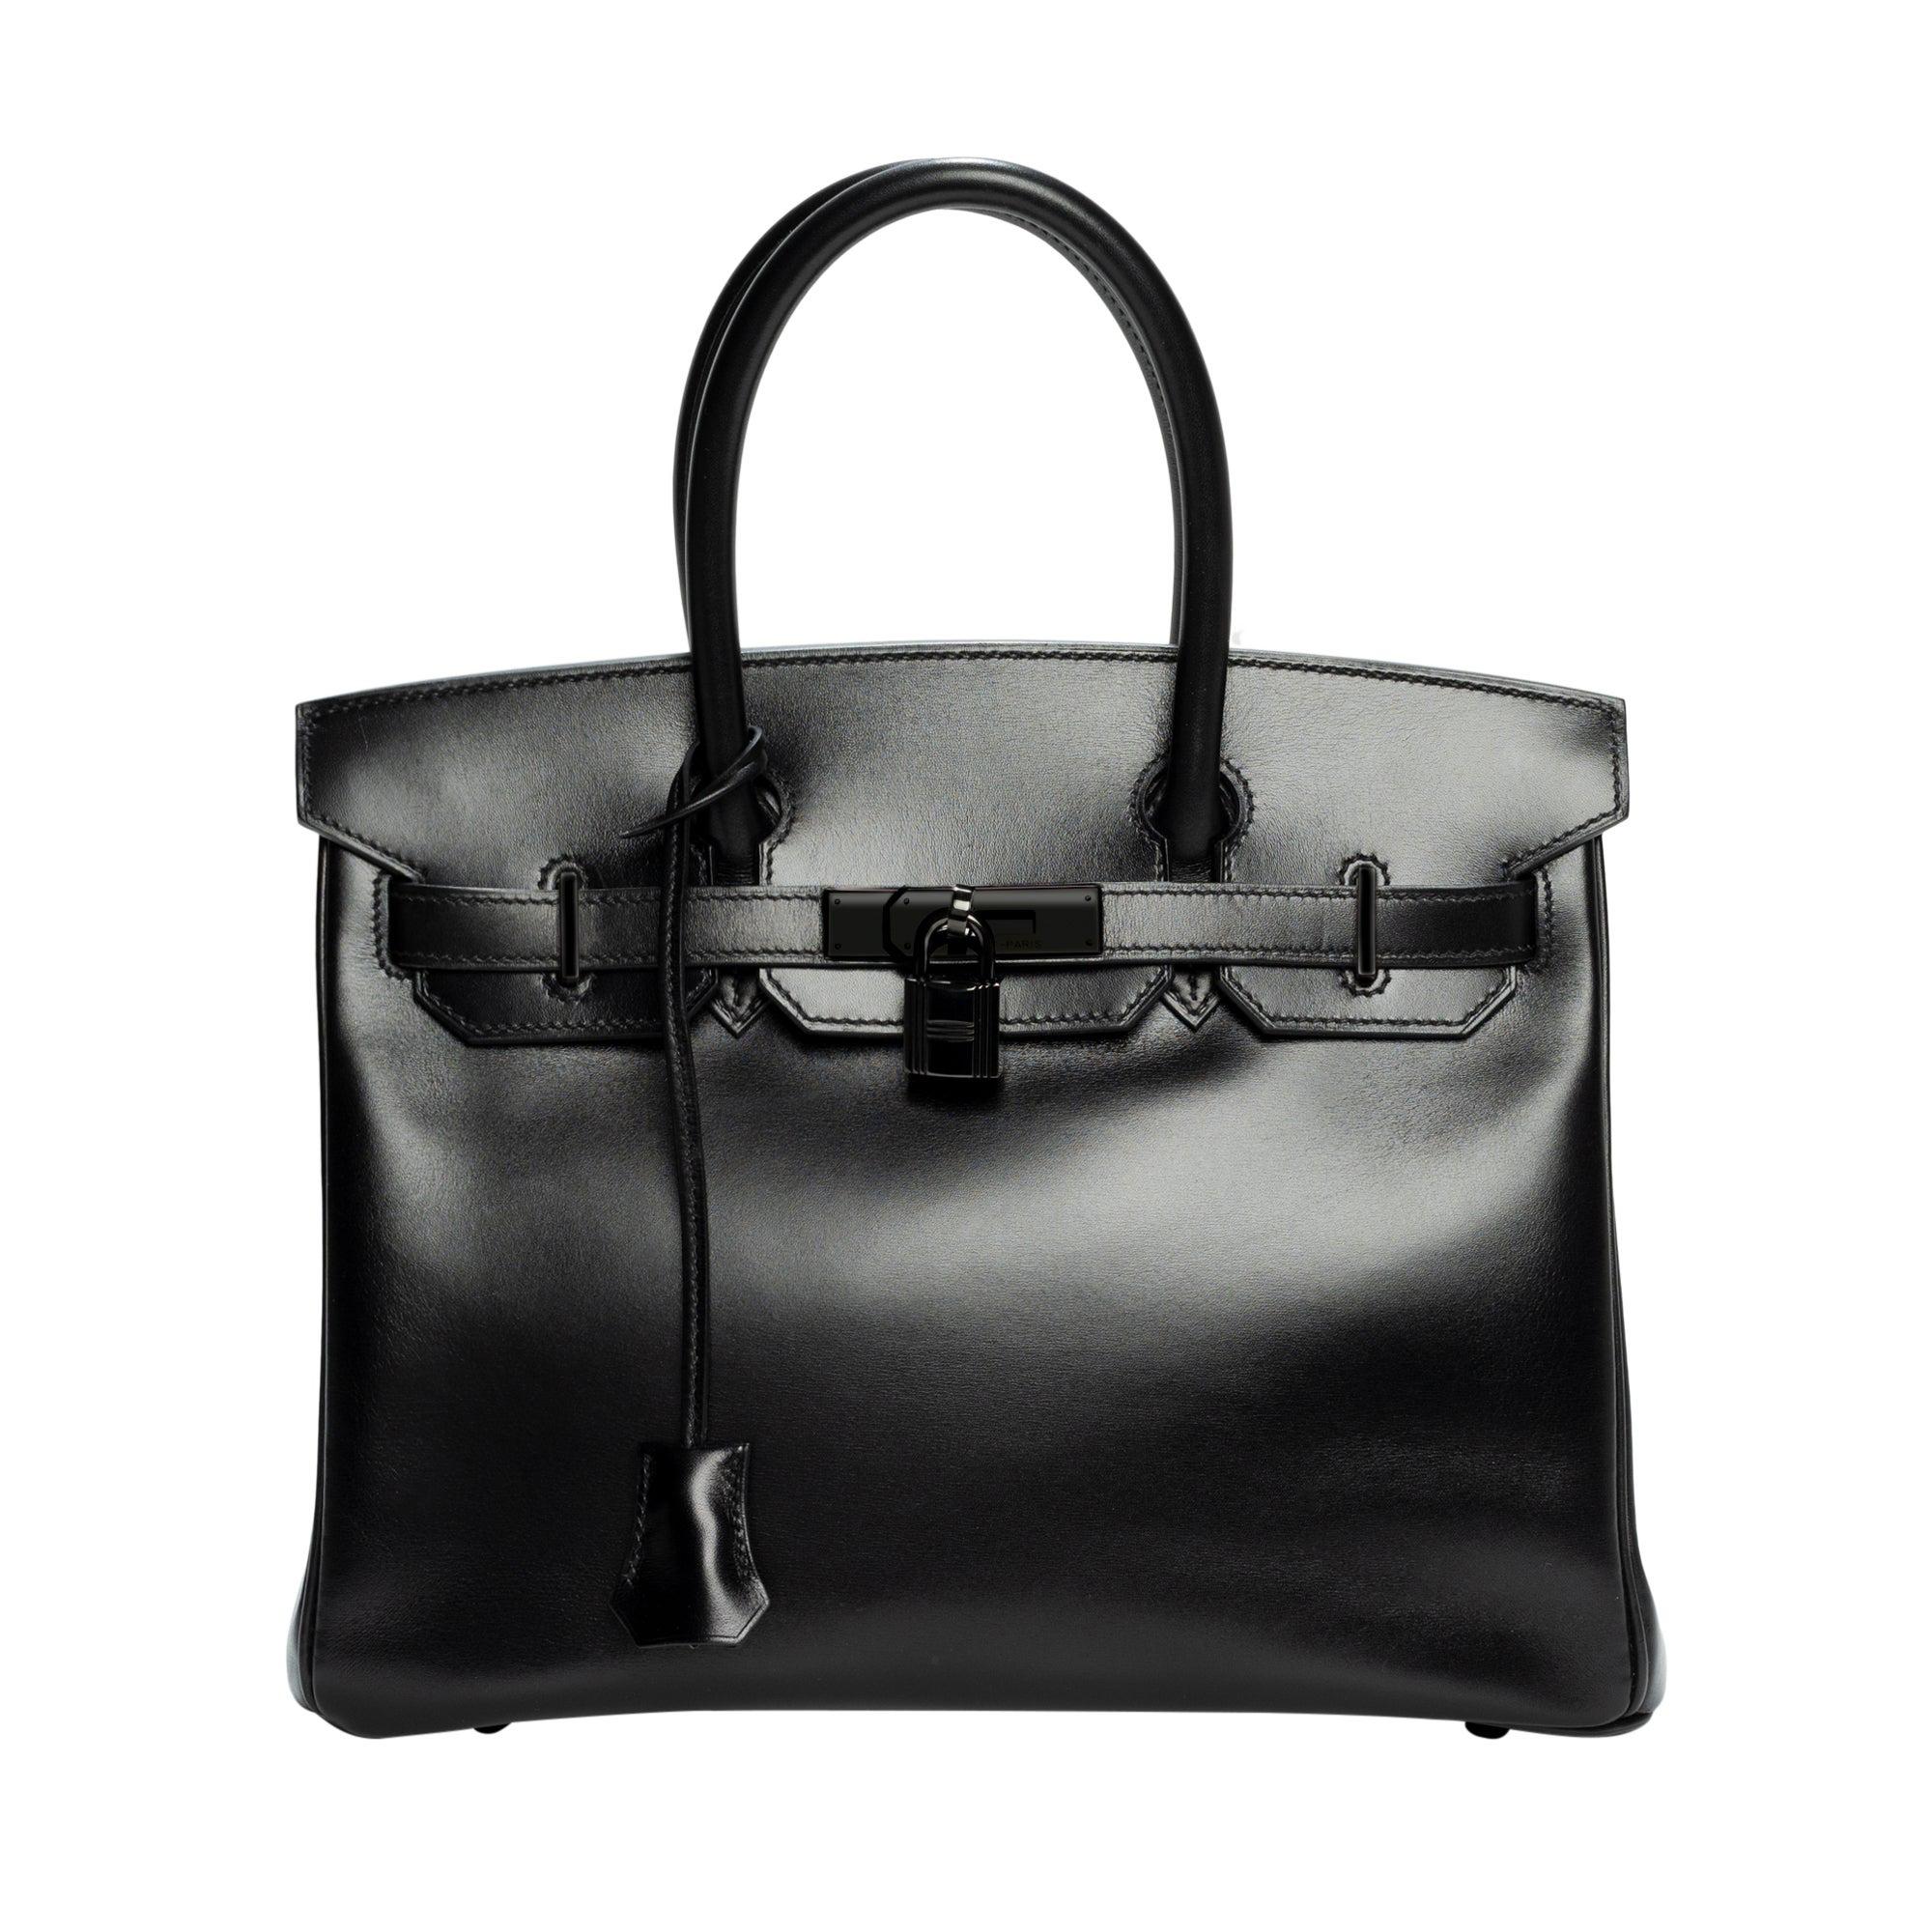 BRAND NEW, RARE Authentic Hermes So Black Birkin 30cm Bag